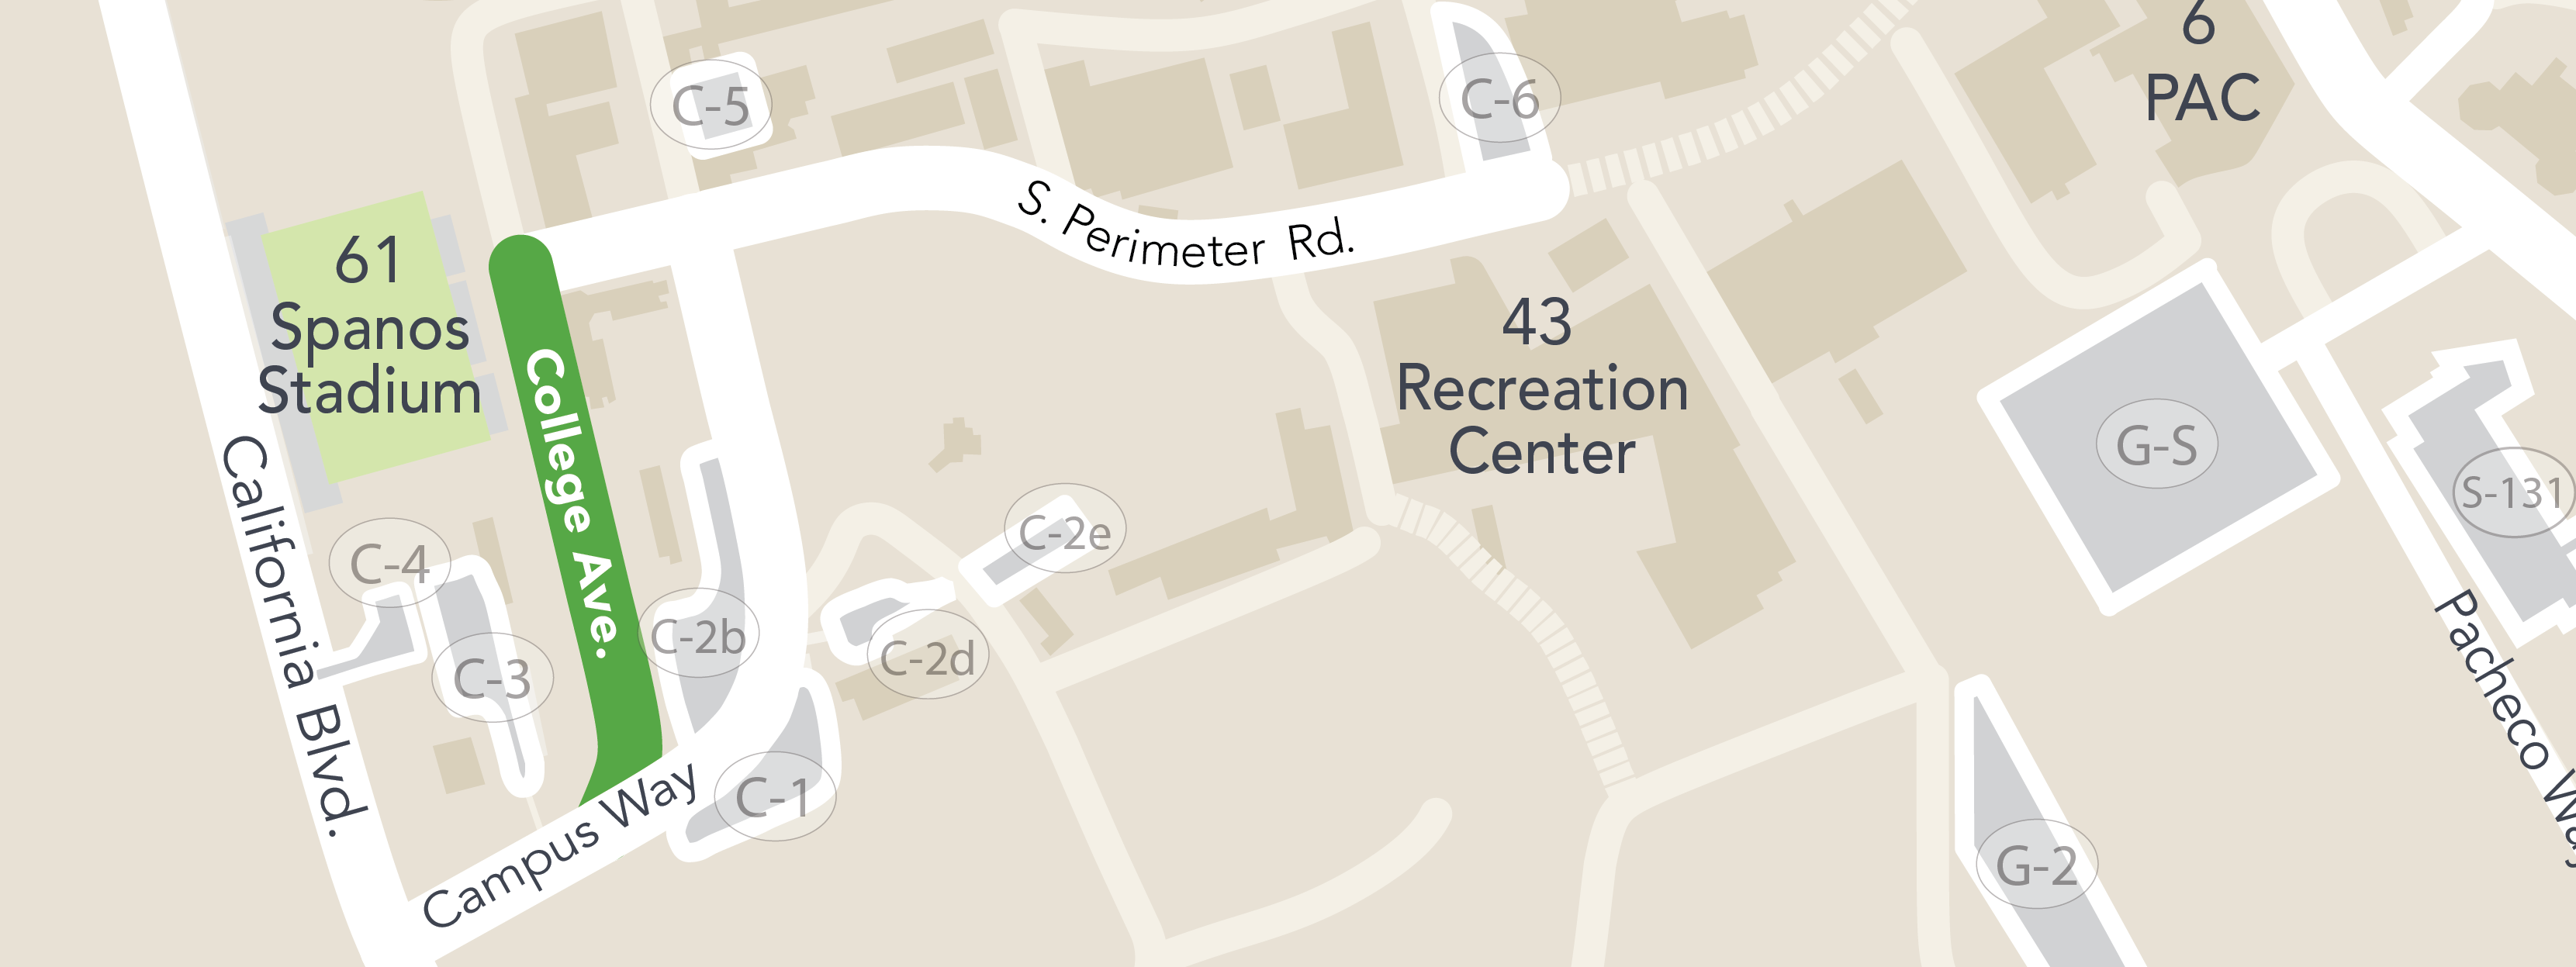 parking Lot College Avenue map